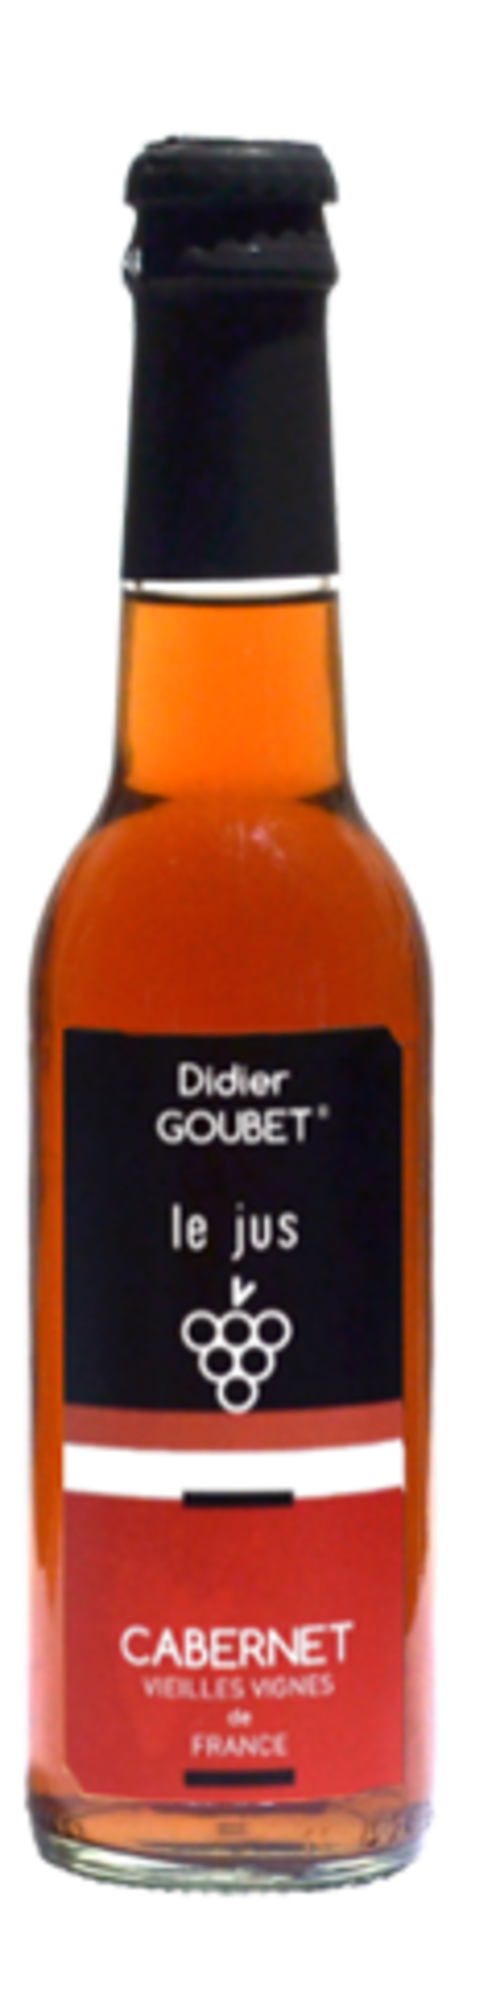 Didier Goubet 卡本內老藤紅葡萄汁<br/>GRAPE JUICE CABERNET <br/>產品圖